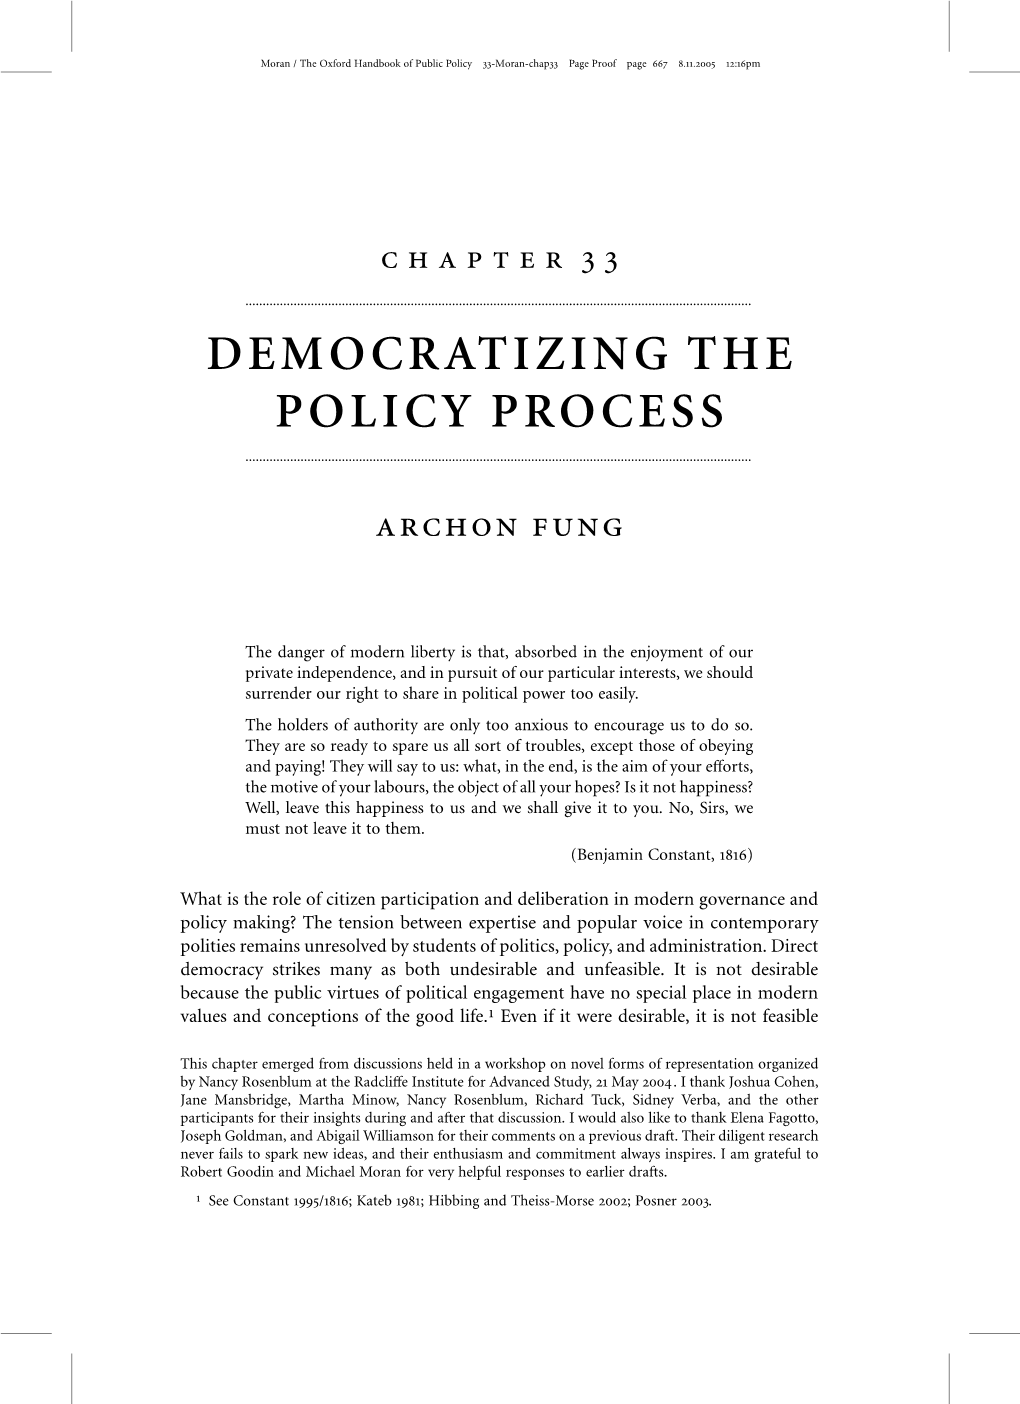 Democratizing the Policy Process